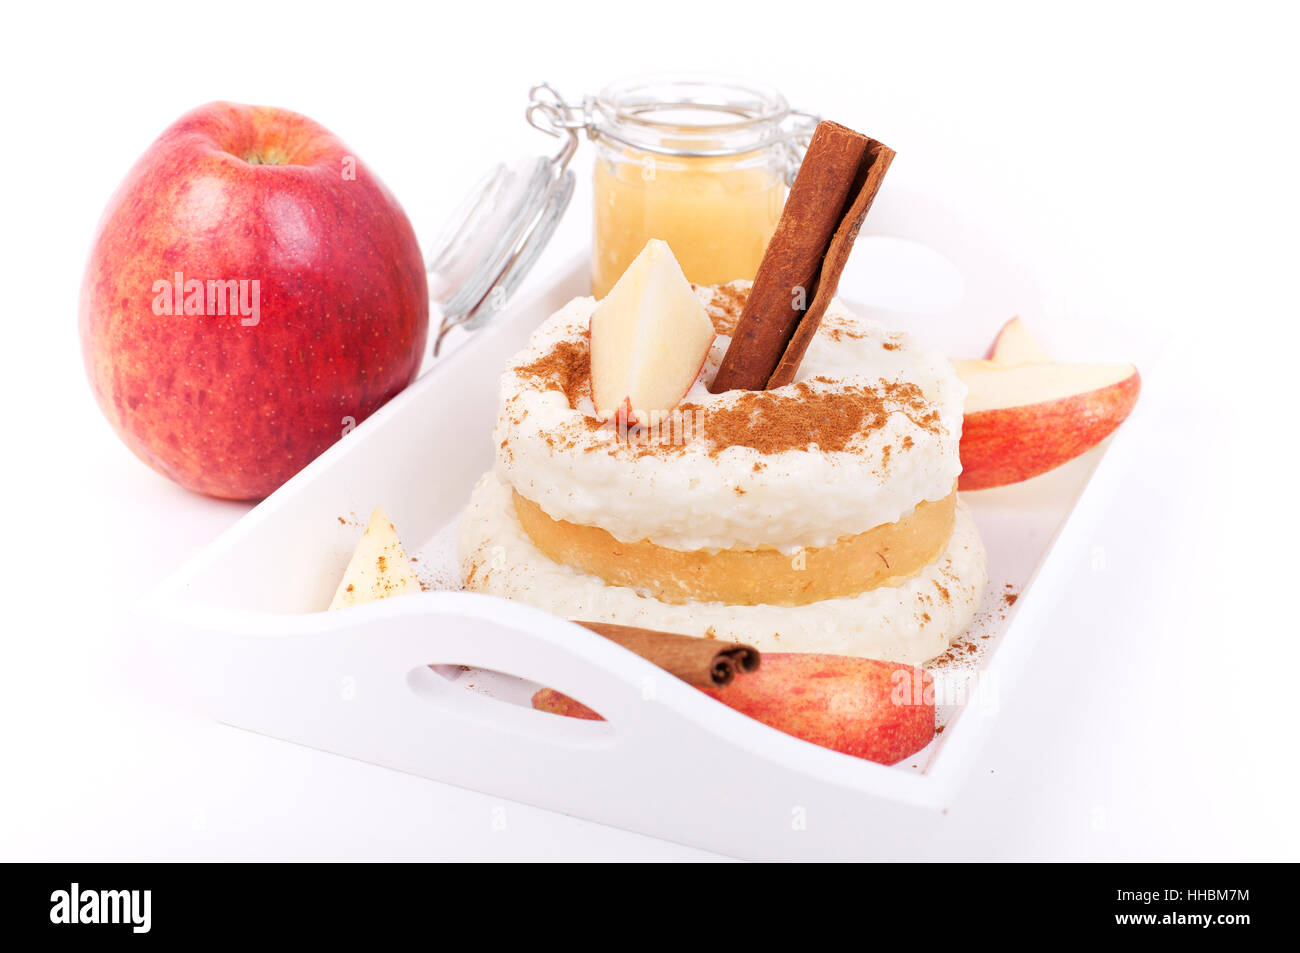 isolated, apples, apple, applesauce, cinnamon stick, rice pudding, dessert, Stock Photo